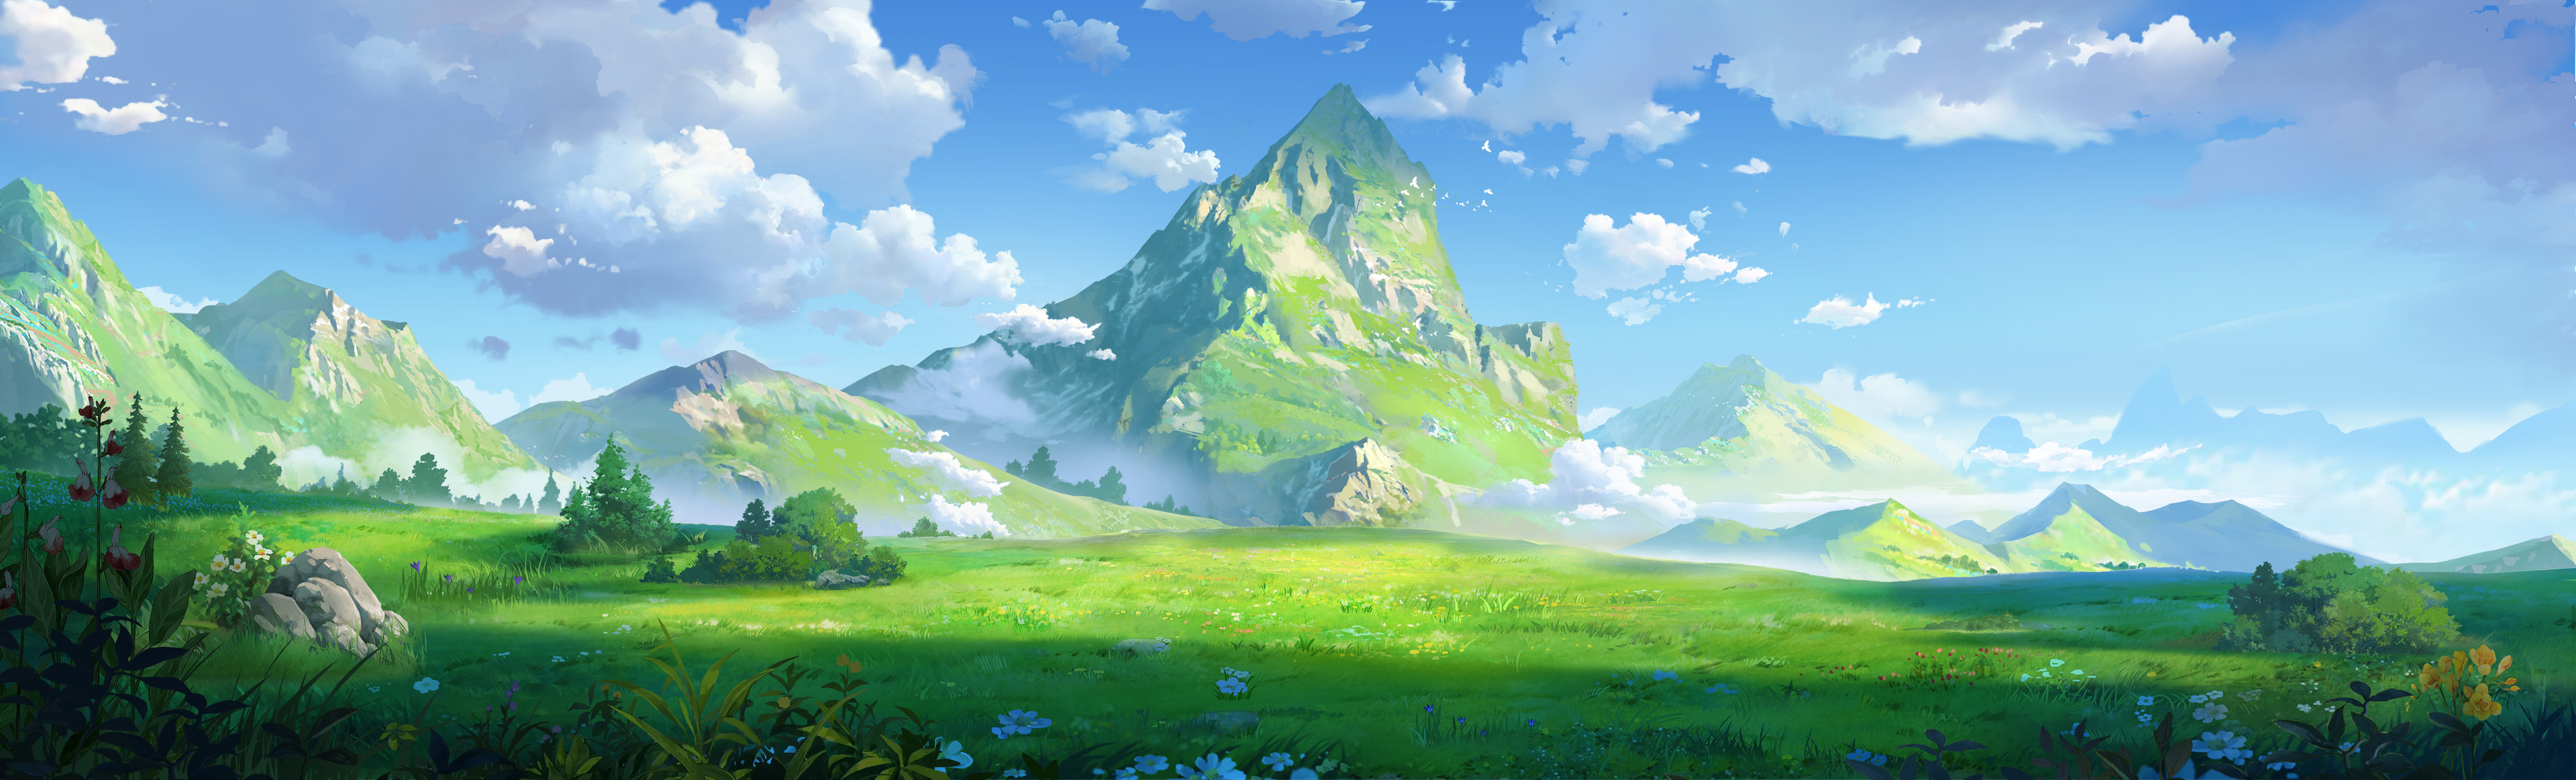 Digital Art Artwork Illustration Landscape Nature Field Mountains Clouds Grass Flowers 3840x1162